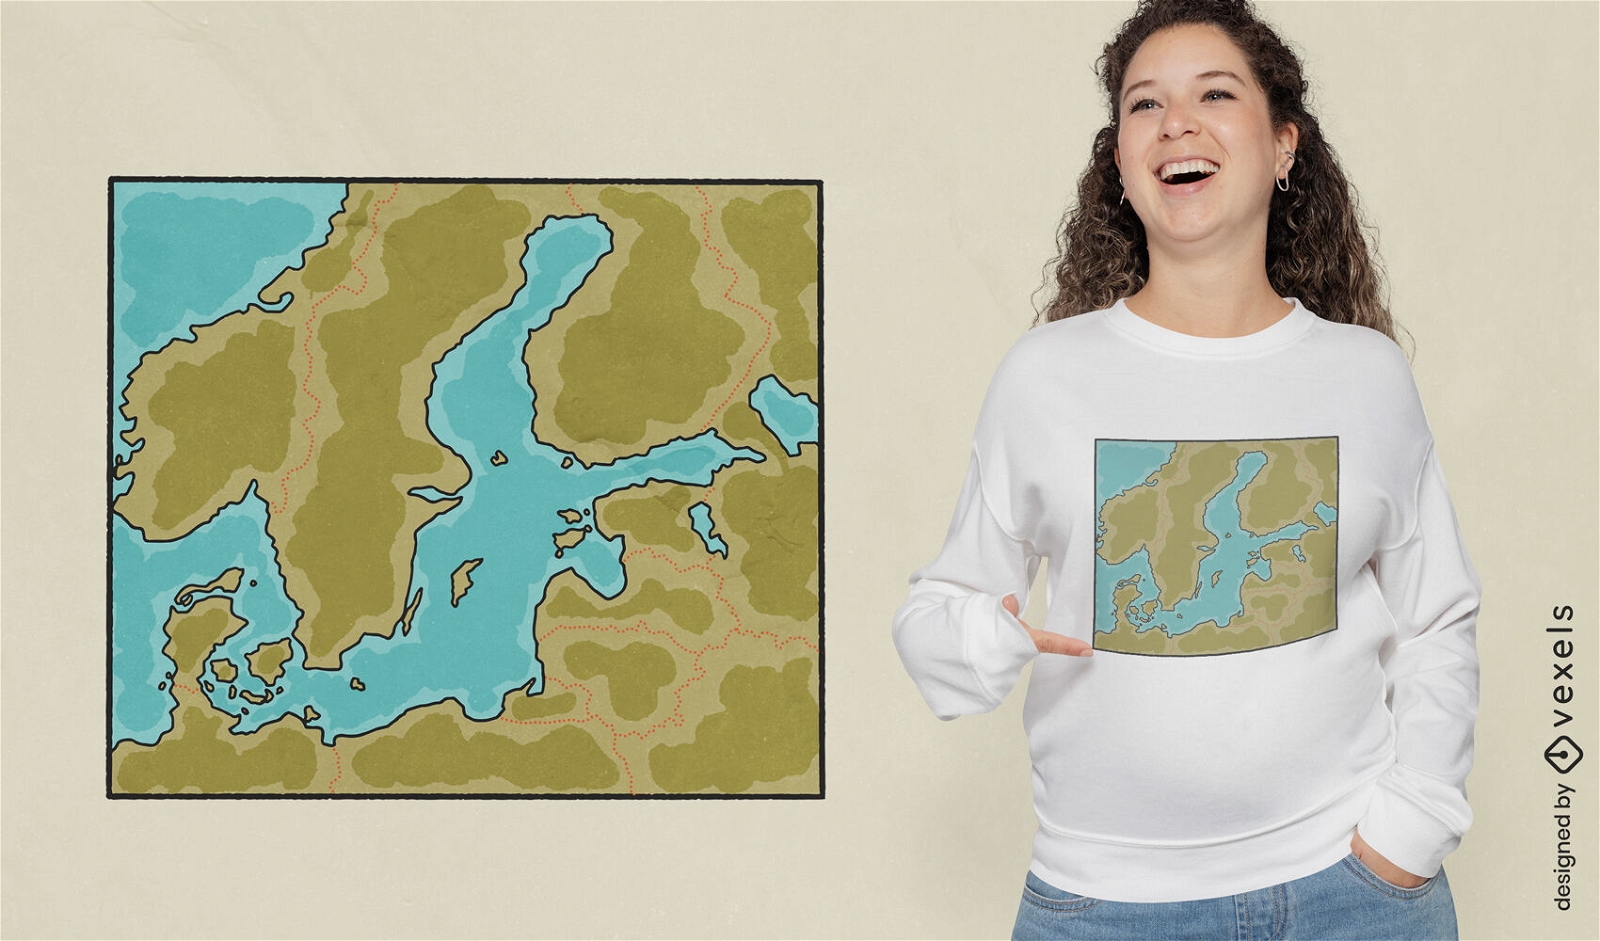 Dise?o de camiseta de mapa del mar b?ltico